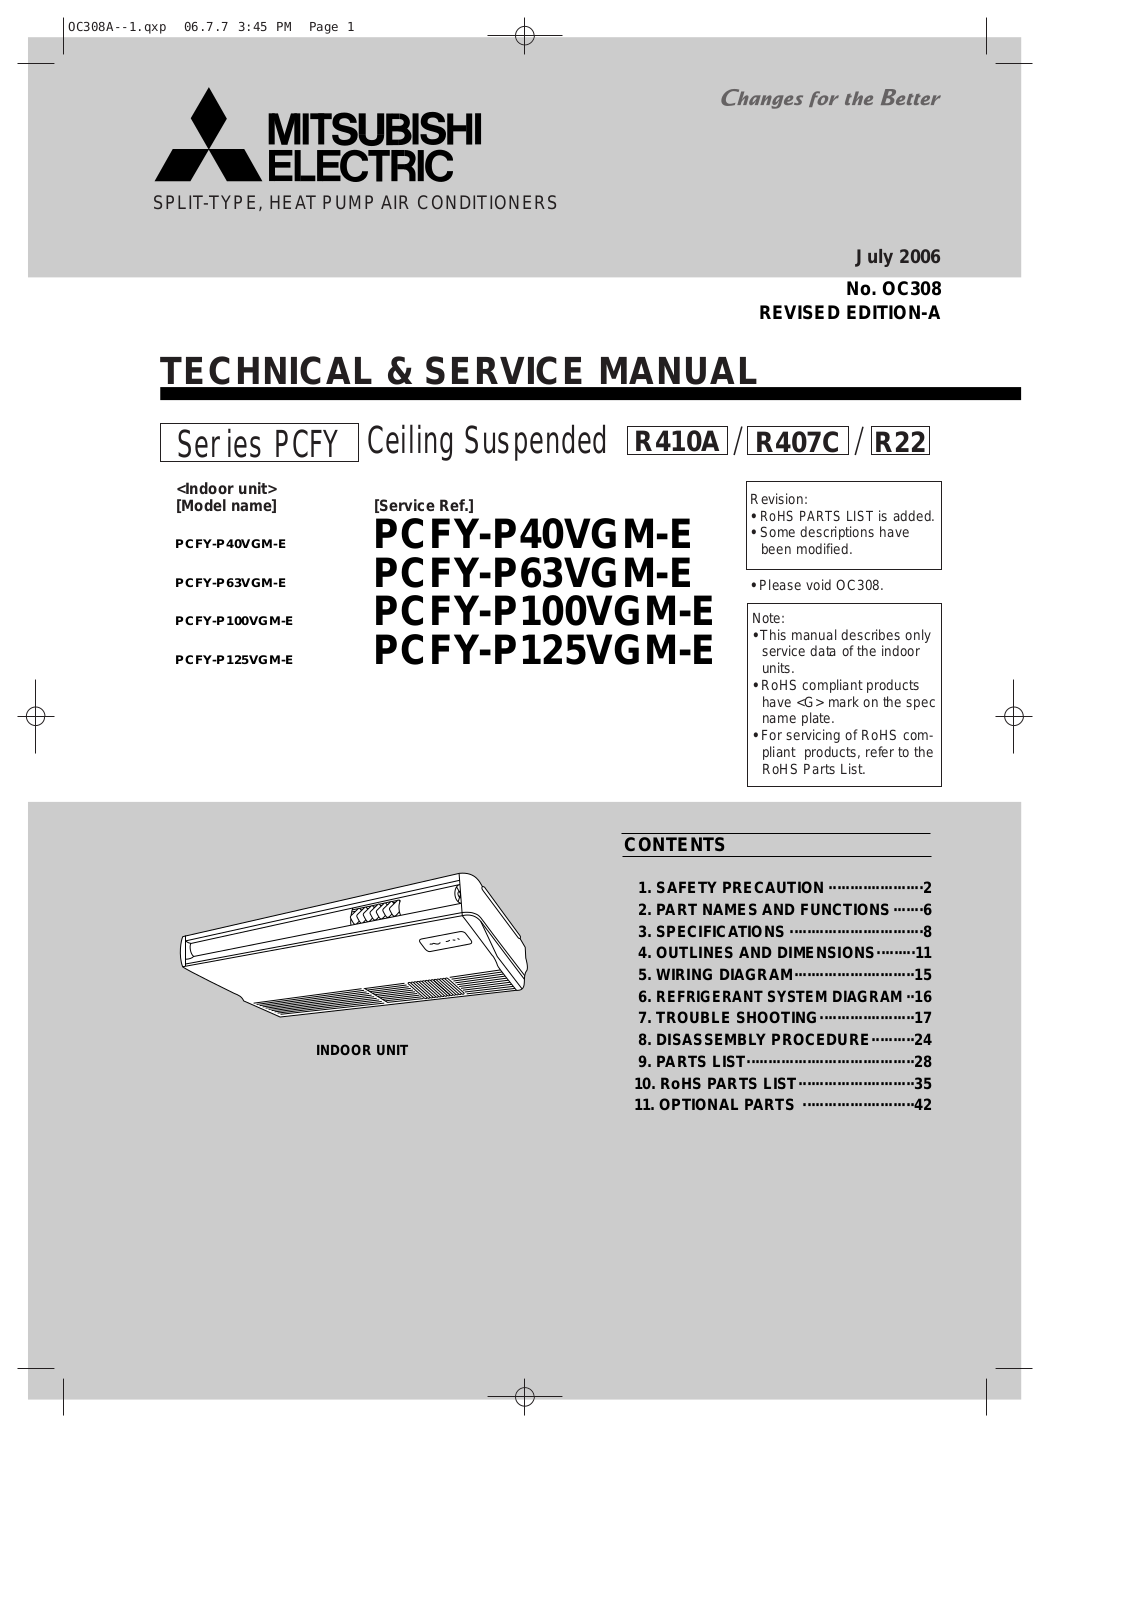 Mitsubishi PCFY-P40VGM-E, PCFY-P63VGM-E, PCFY-P100VGM-E, PCFY-P125VGM-E Service Manual